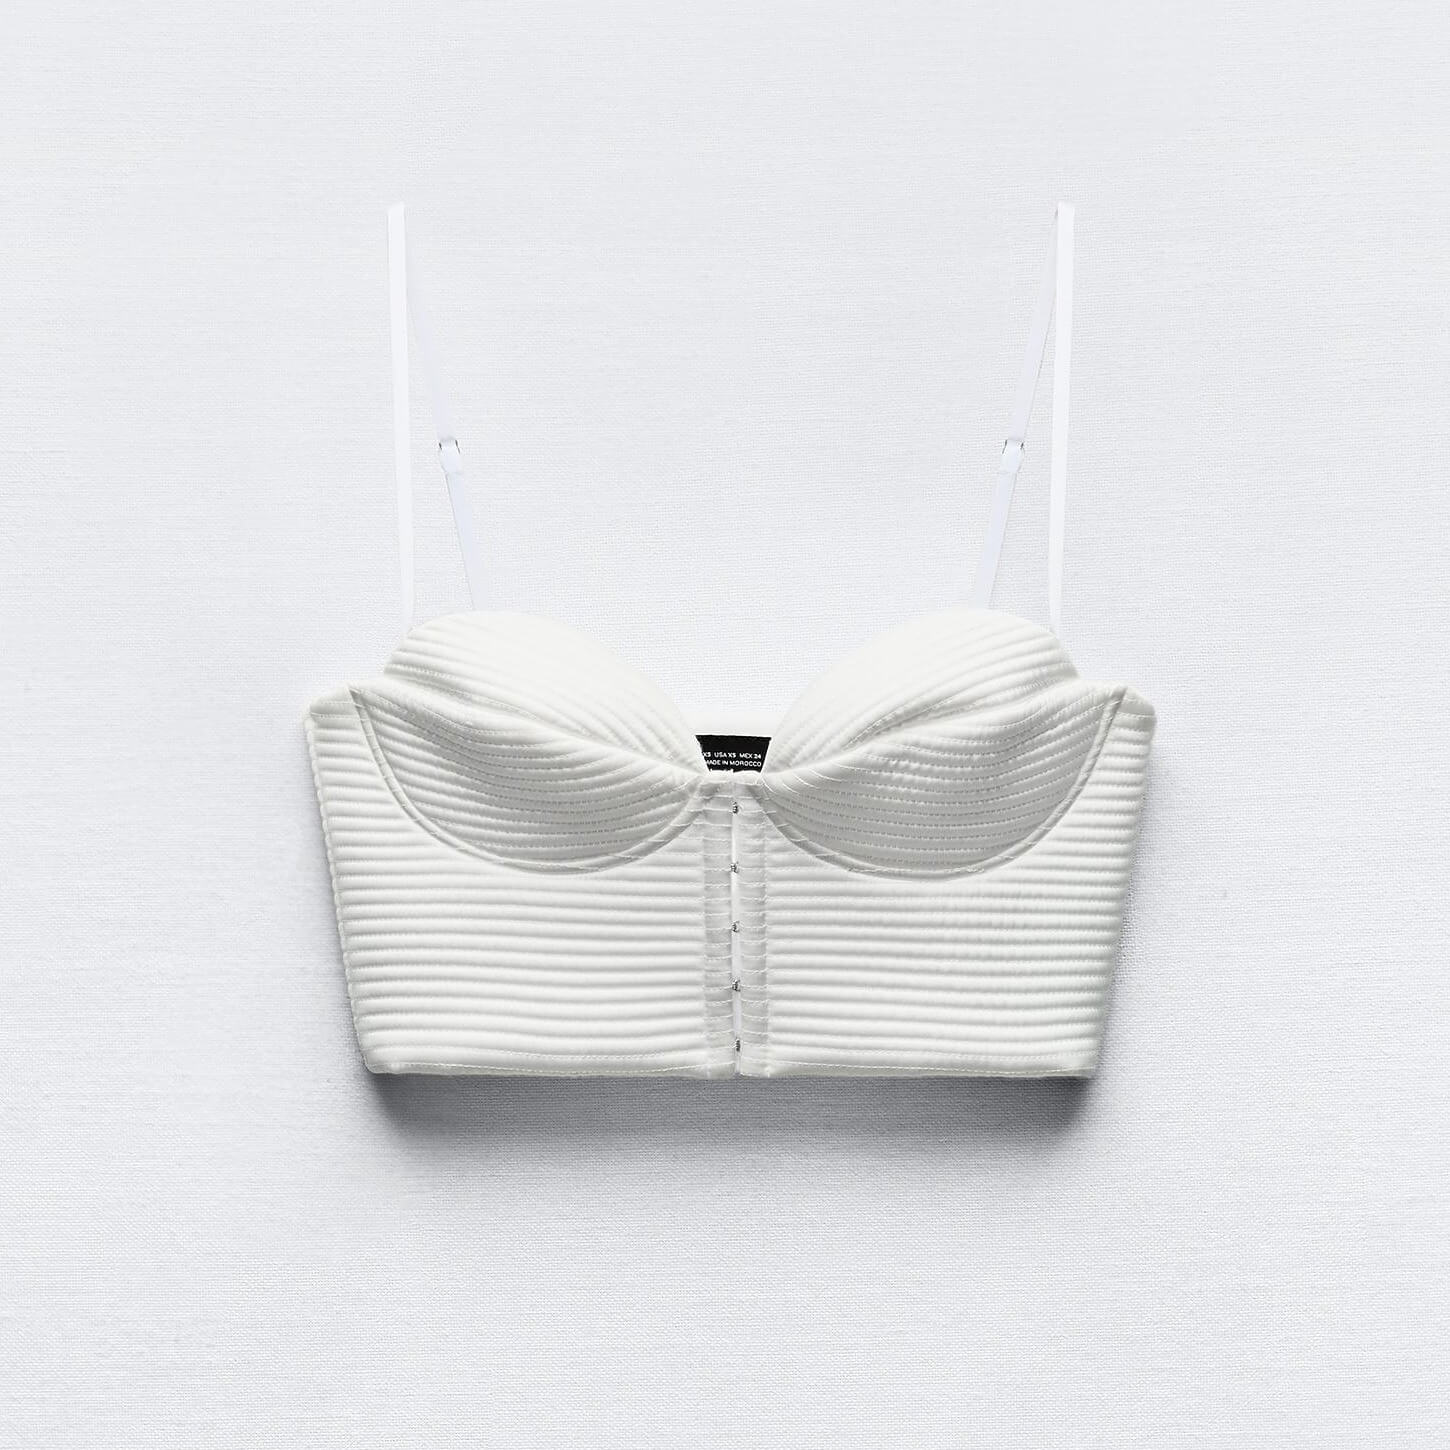 Топ Zara Satin Corsetry-inspired, белый топ zara satin corsetry inspired белый